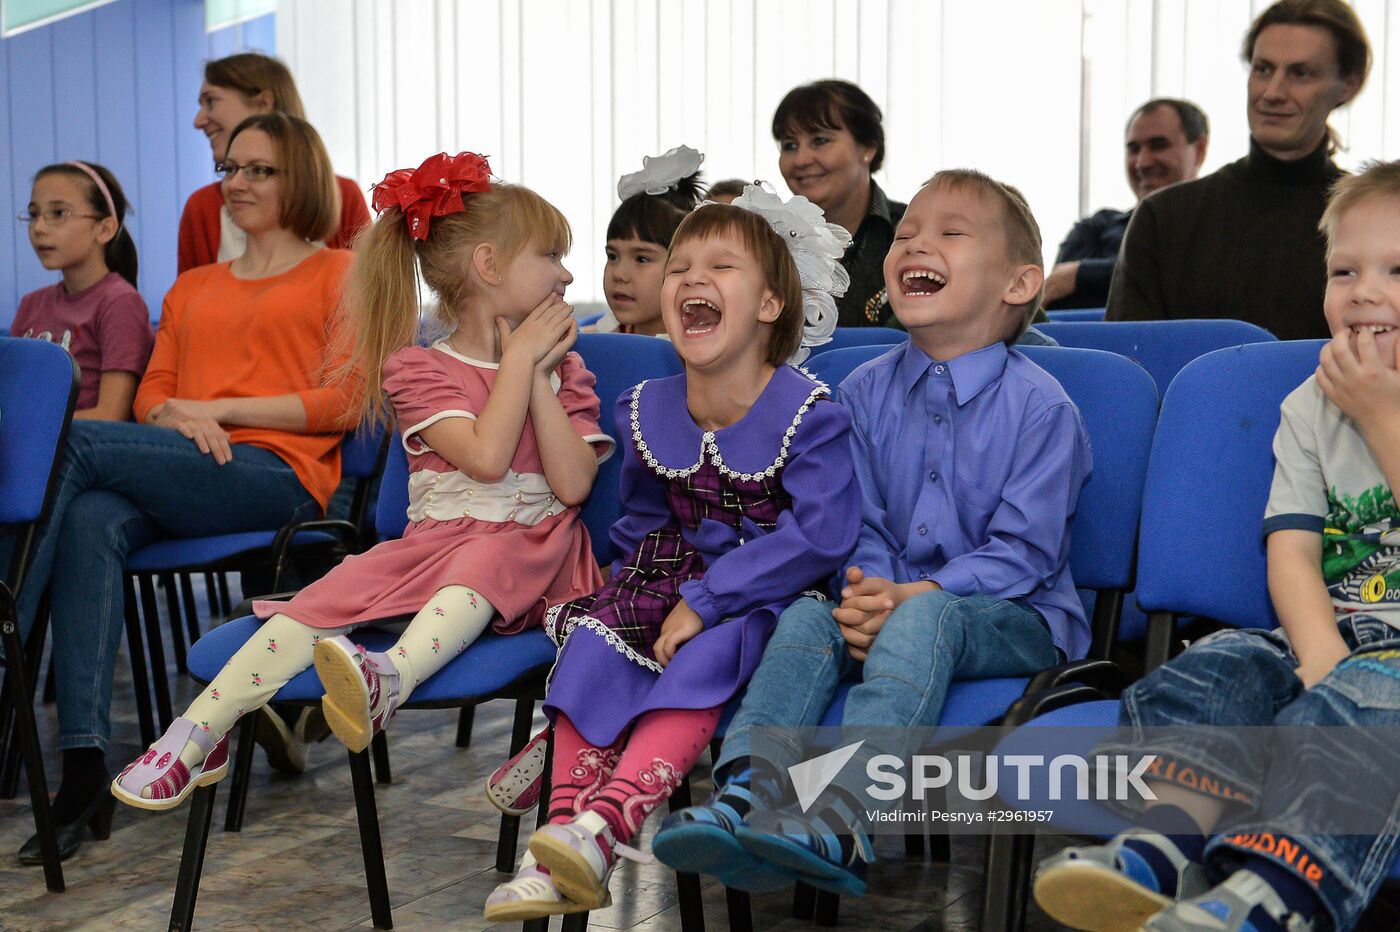 Train of Hope adoption program in Chelyabinsk Region